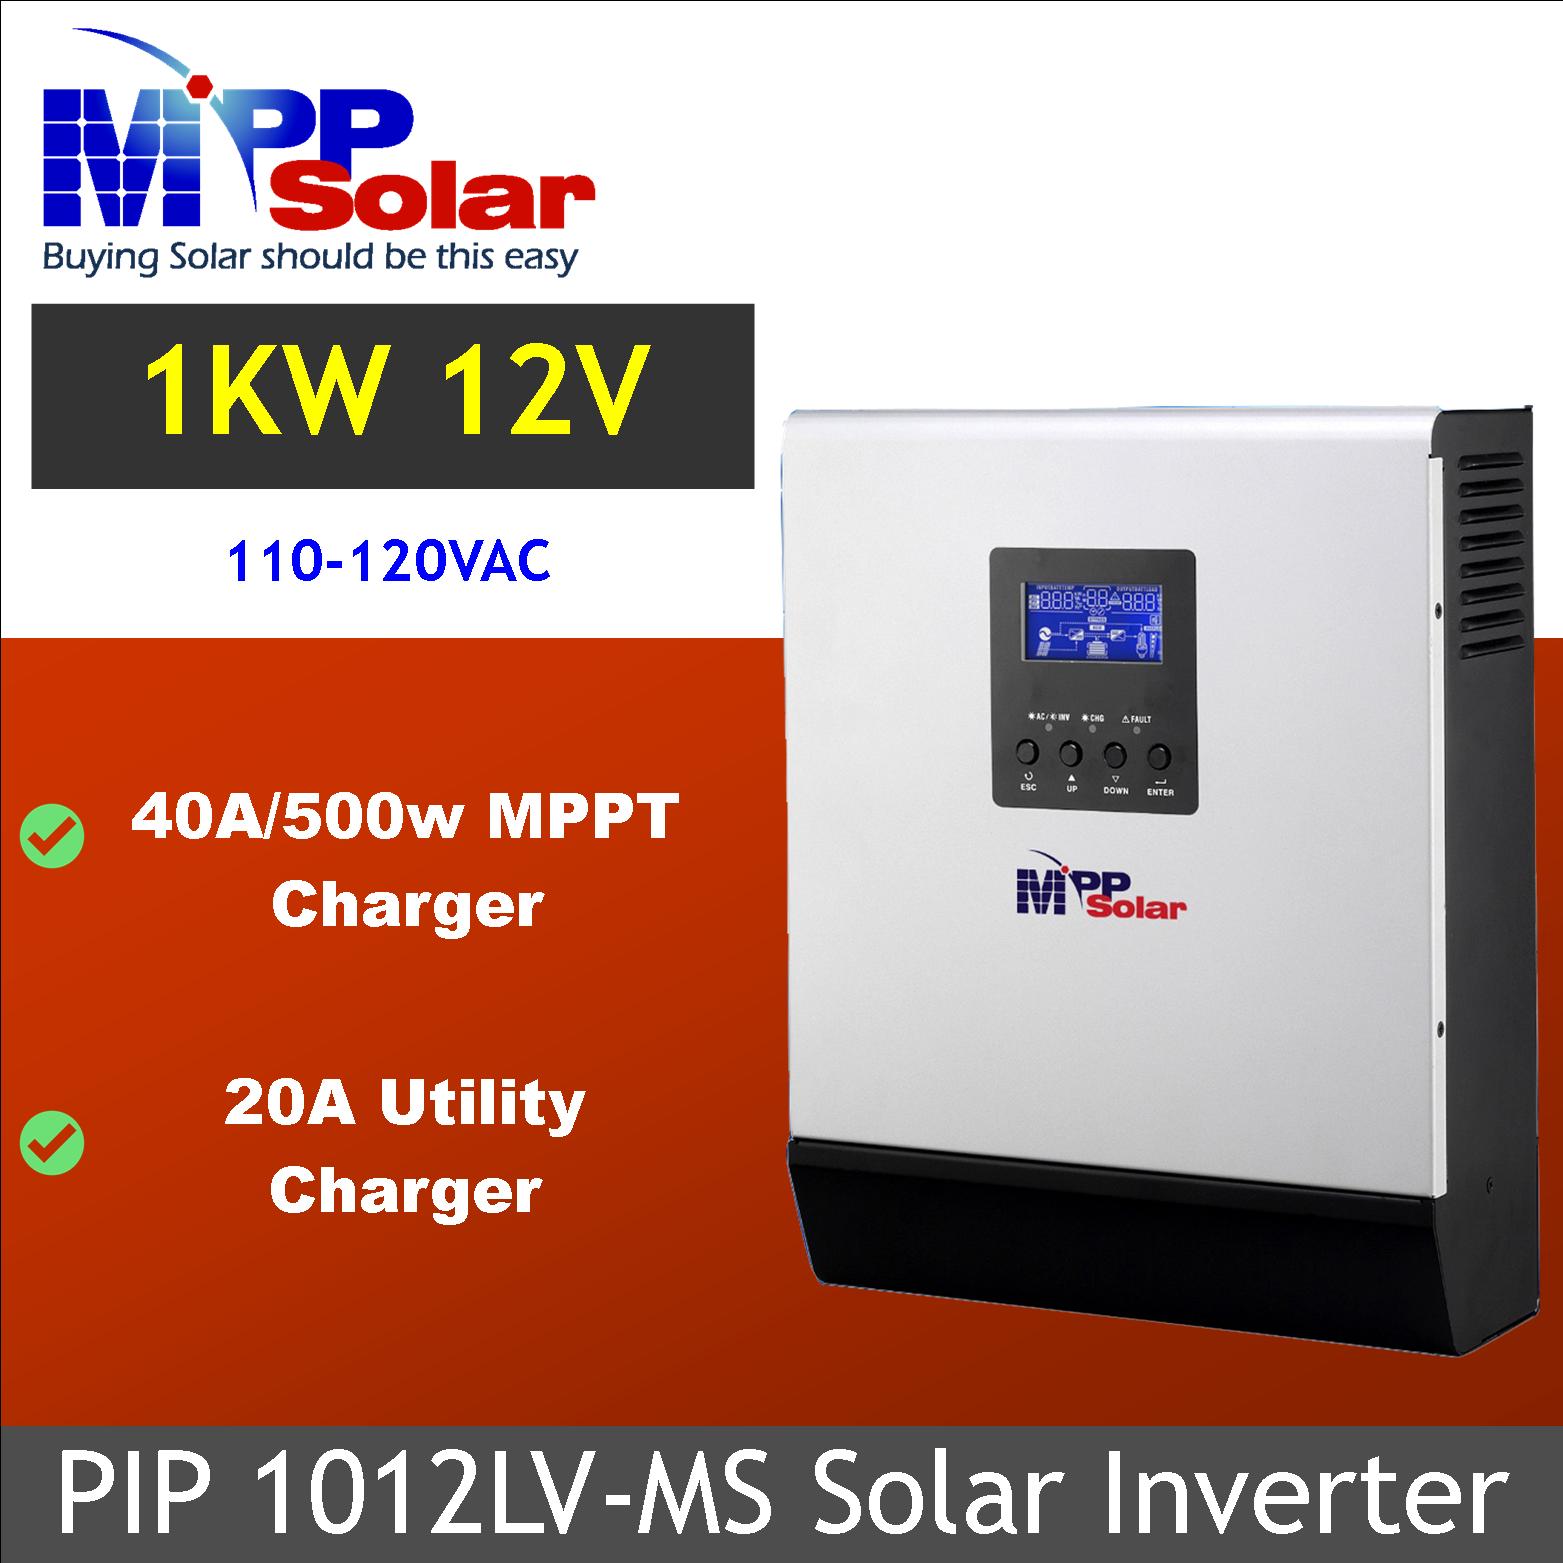 Hybrid LV2424 2.4kw 24v mpp solar hybrid inverter 110vac 80A mppt charger